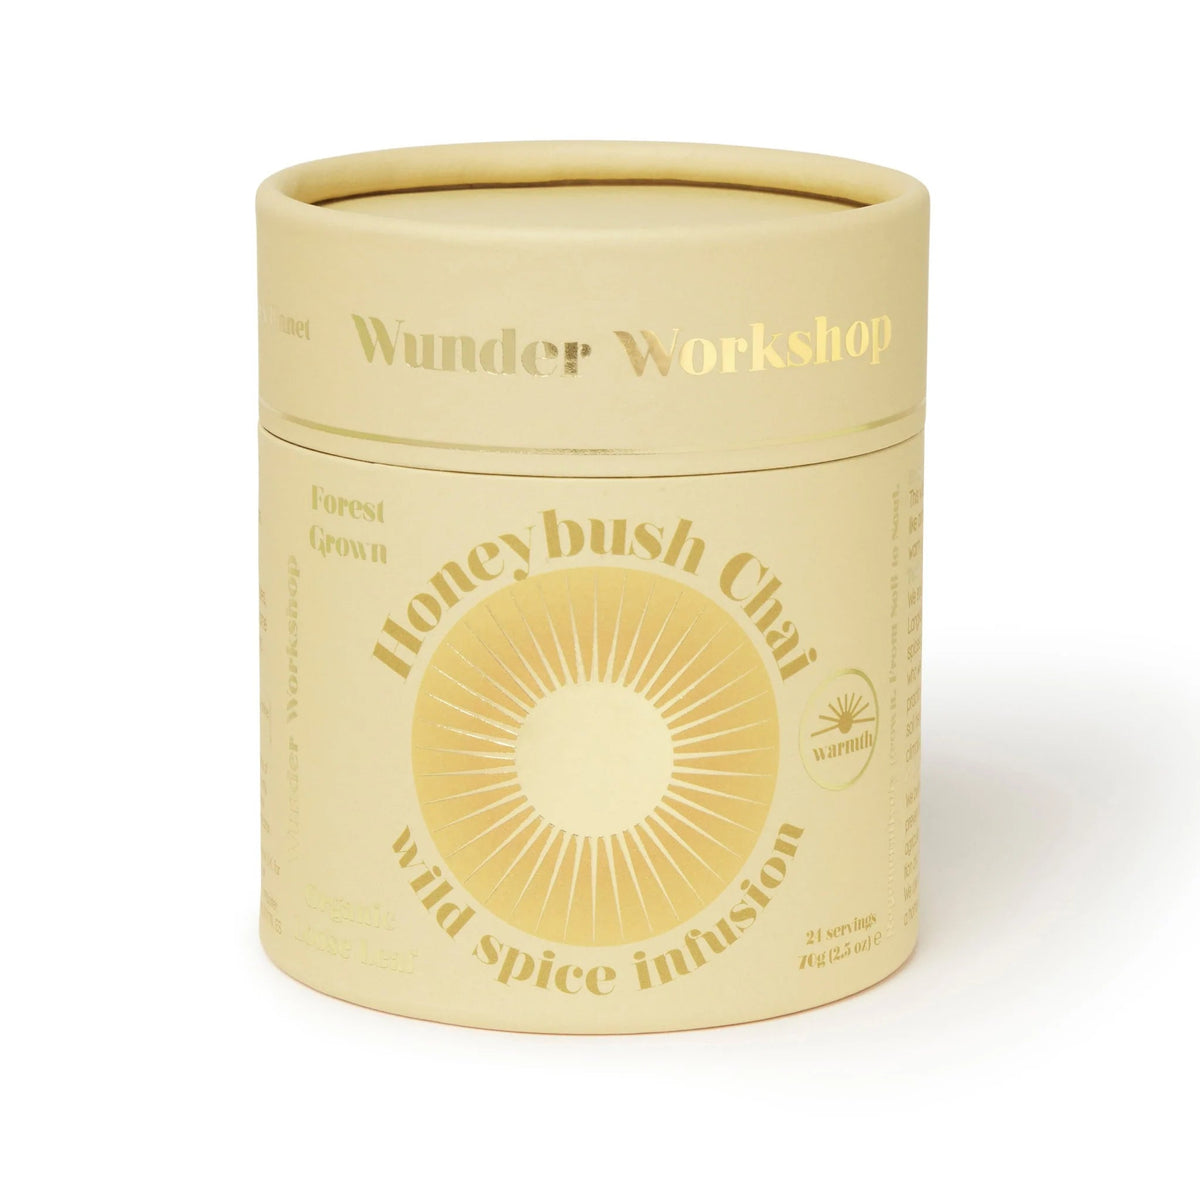 Honeybush Chai - Wild Spice Infusion Tee Wunder Workshop - Genuine Selection